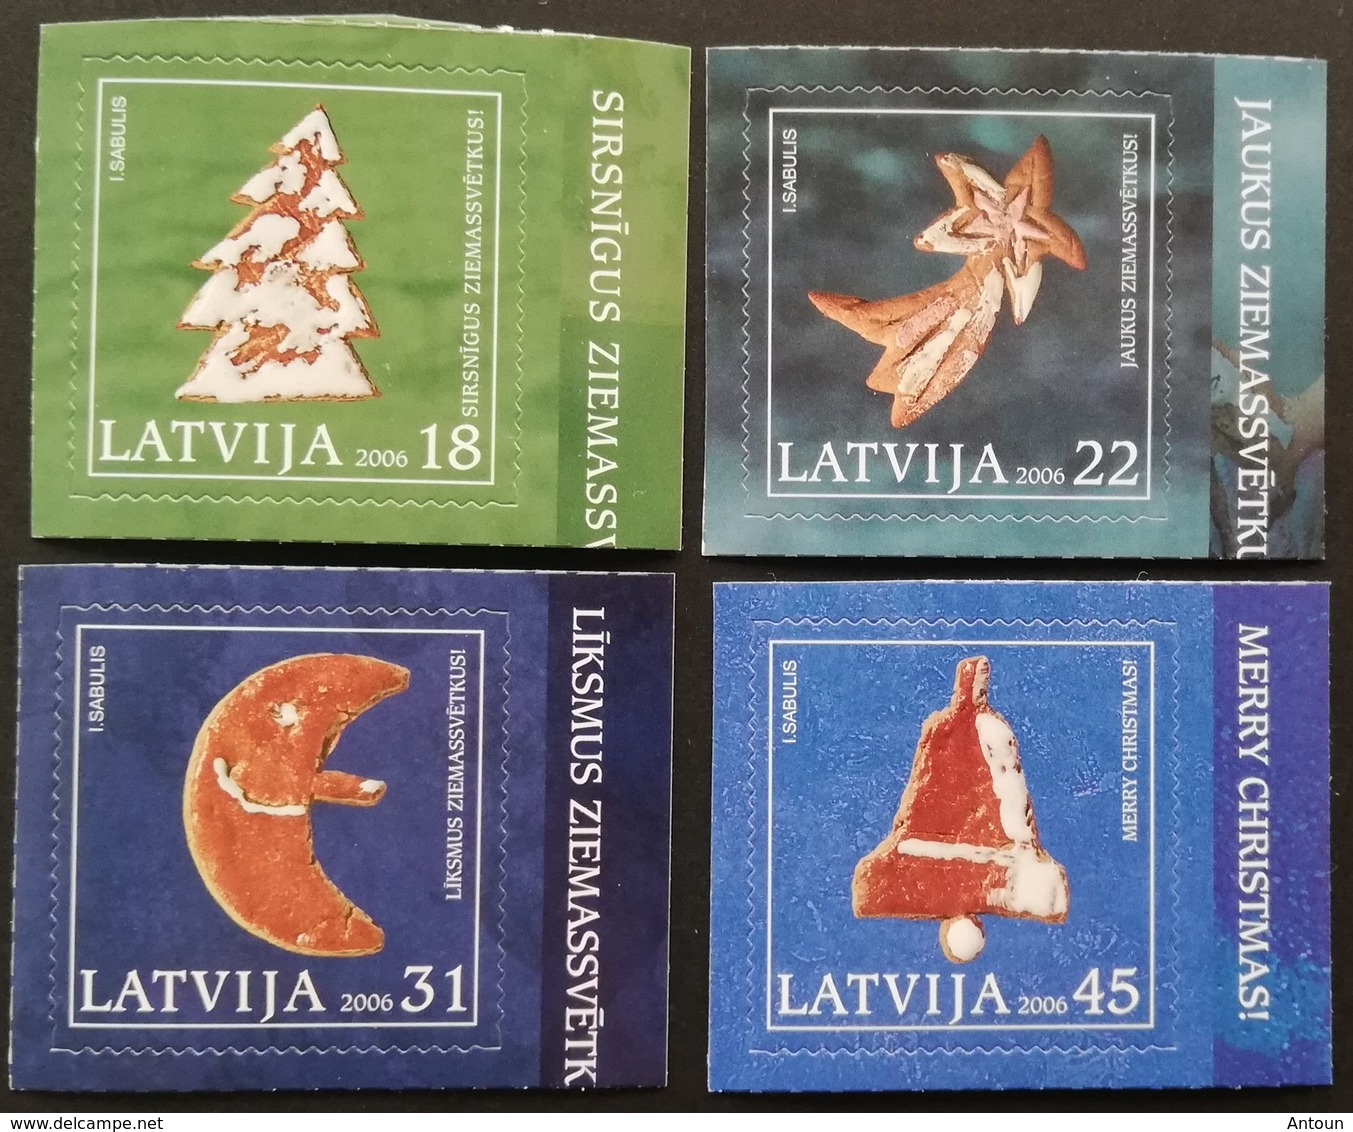 Latvia 2006 Christmas POSTAGE TO BE ADDED ON ALL ITEMS - Latvia